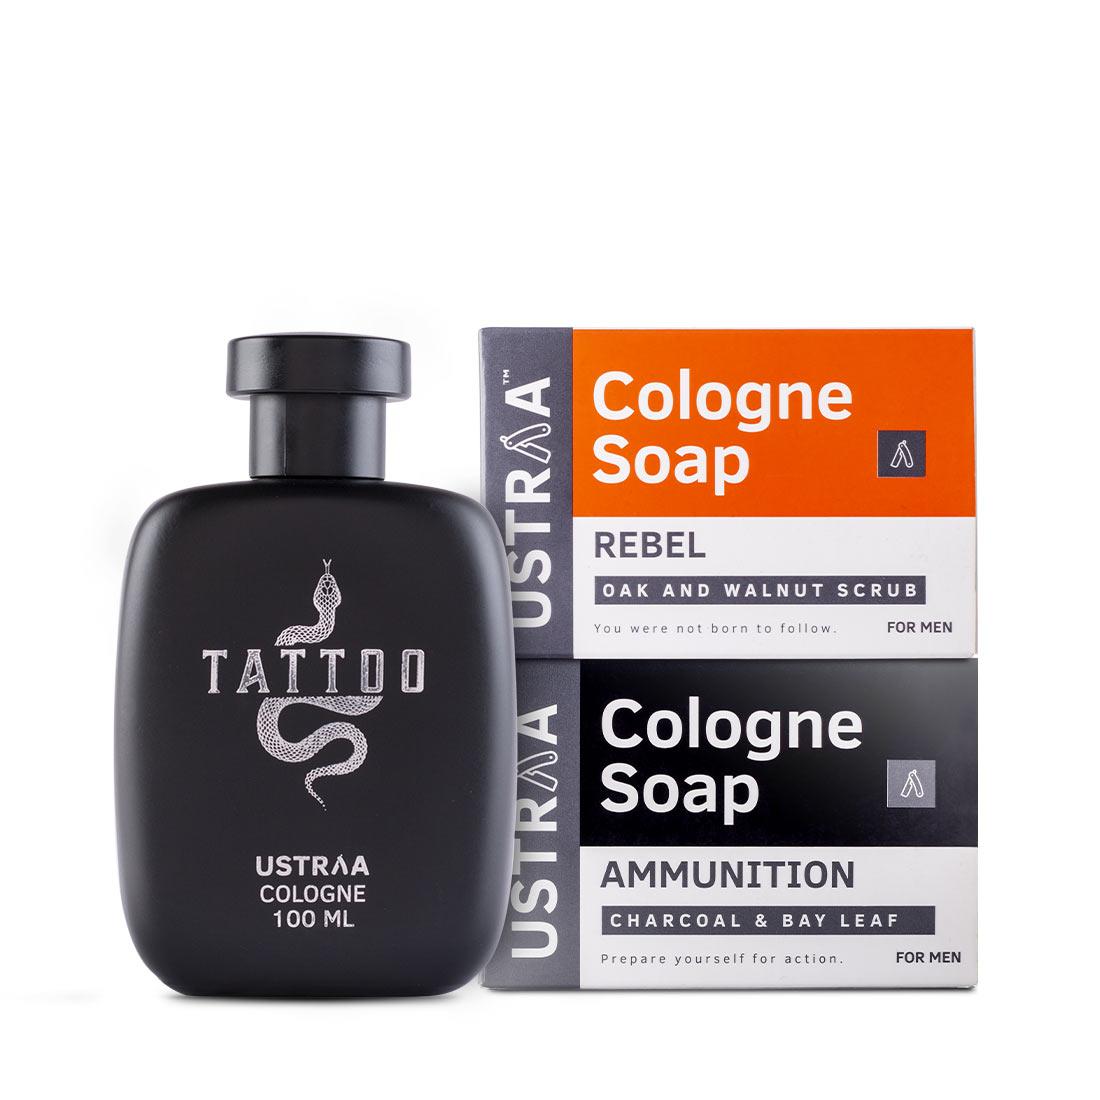 Ustraa Cologne Shower Pack for Men- Tattoo Cologne, Ammunition, Rebel Soap